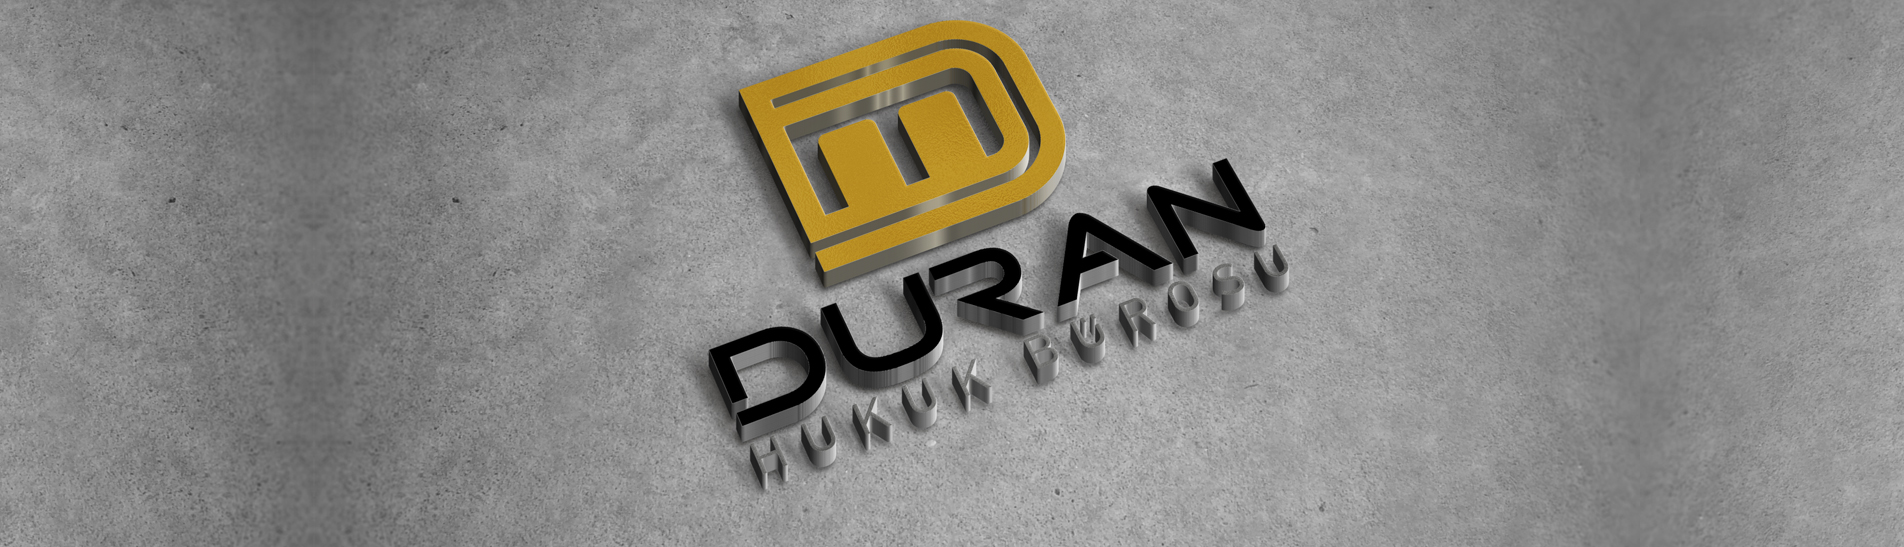 Duran Hukuk Brosu | www.duranhukuk.com.tr